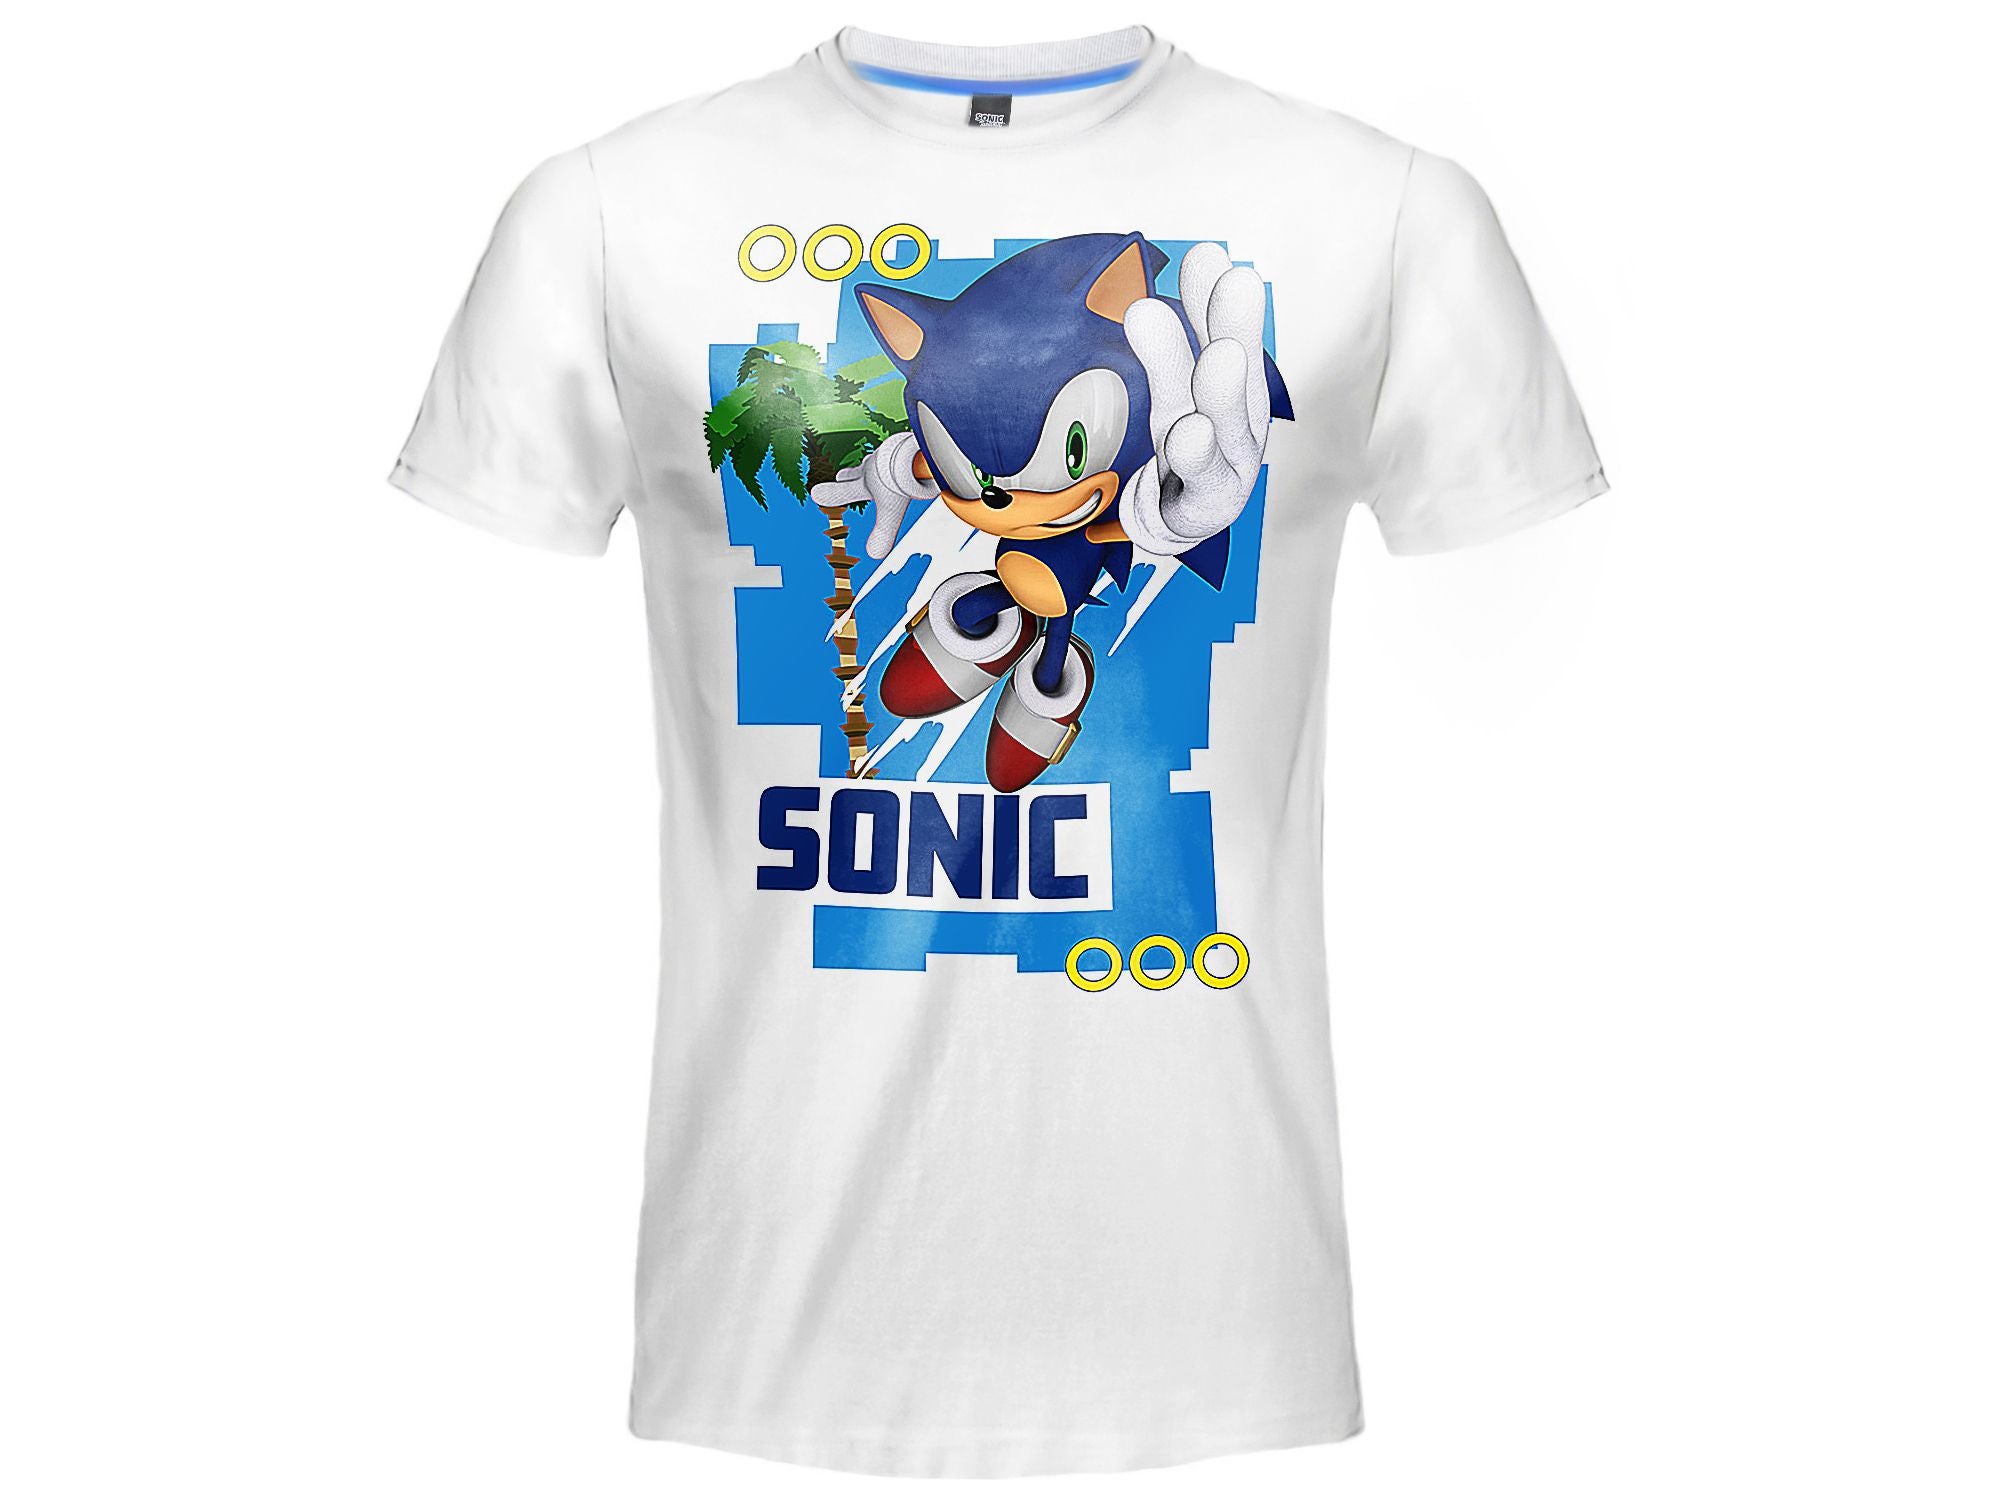 T-Shirt Sonic The Hedgehog - Bianca 9/11 - Disponibile in 2/3 giorni lavorativi